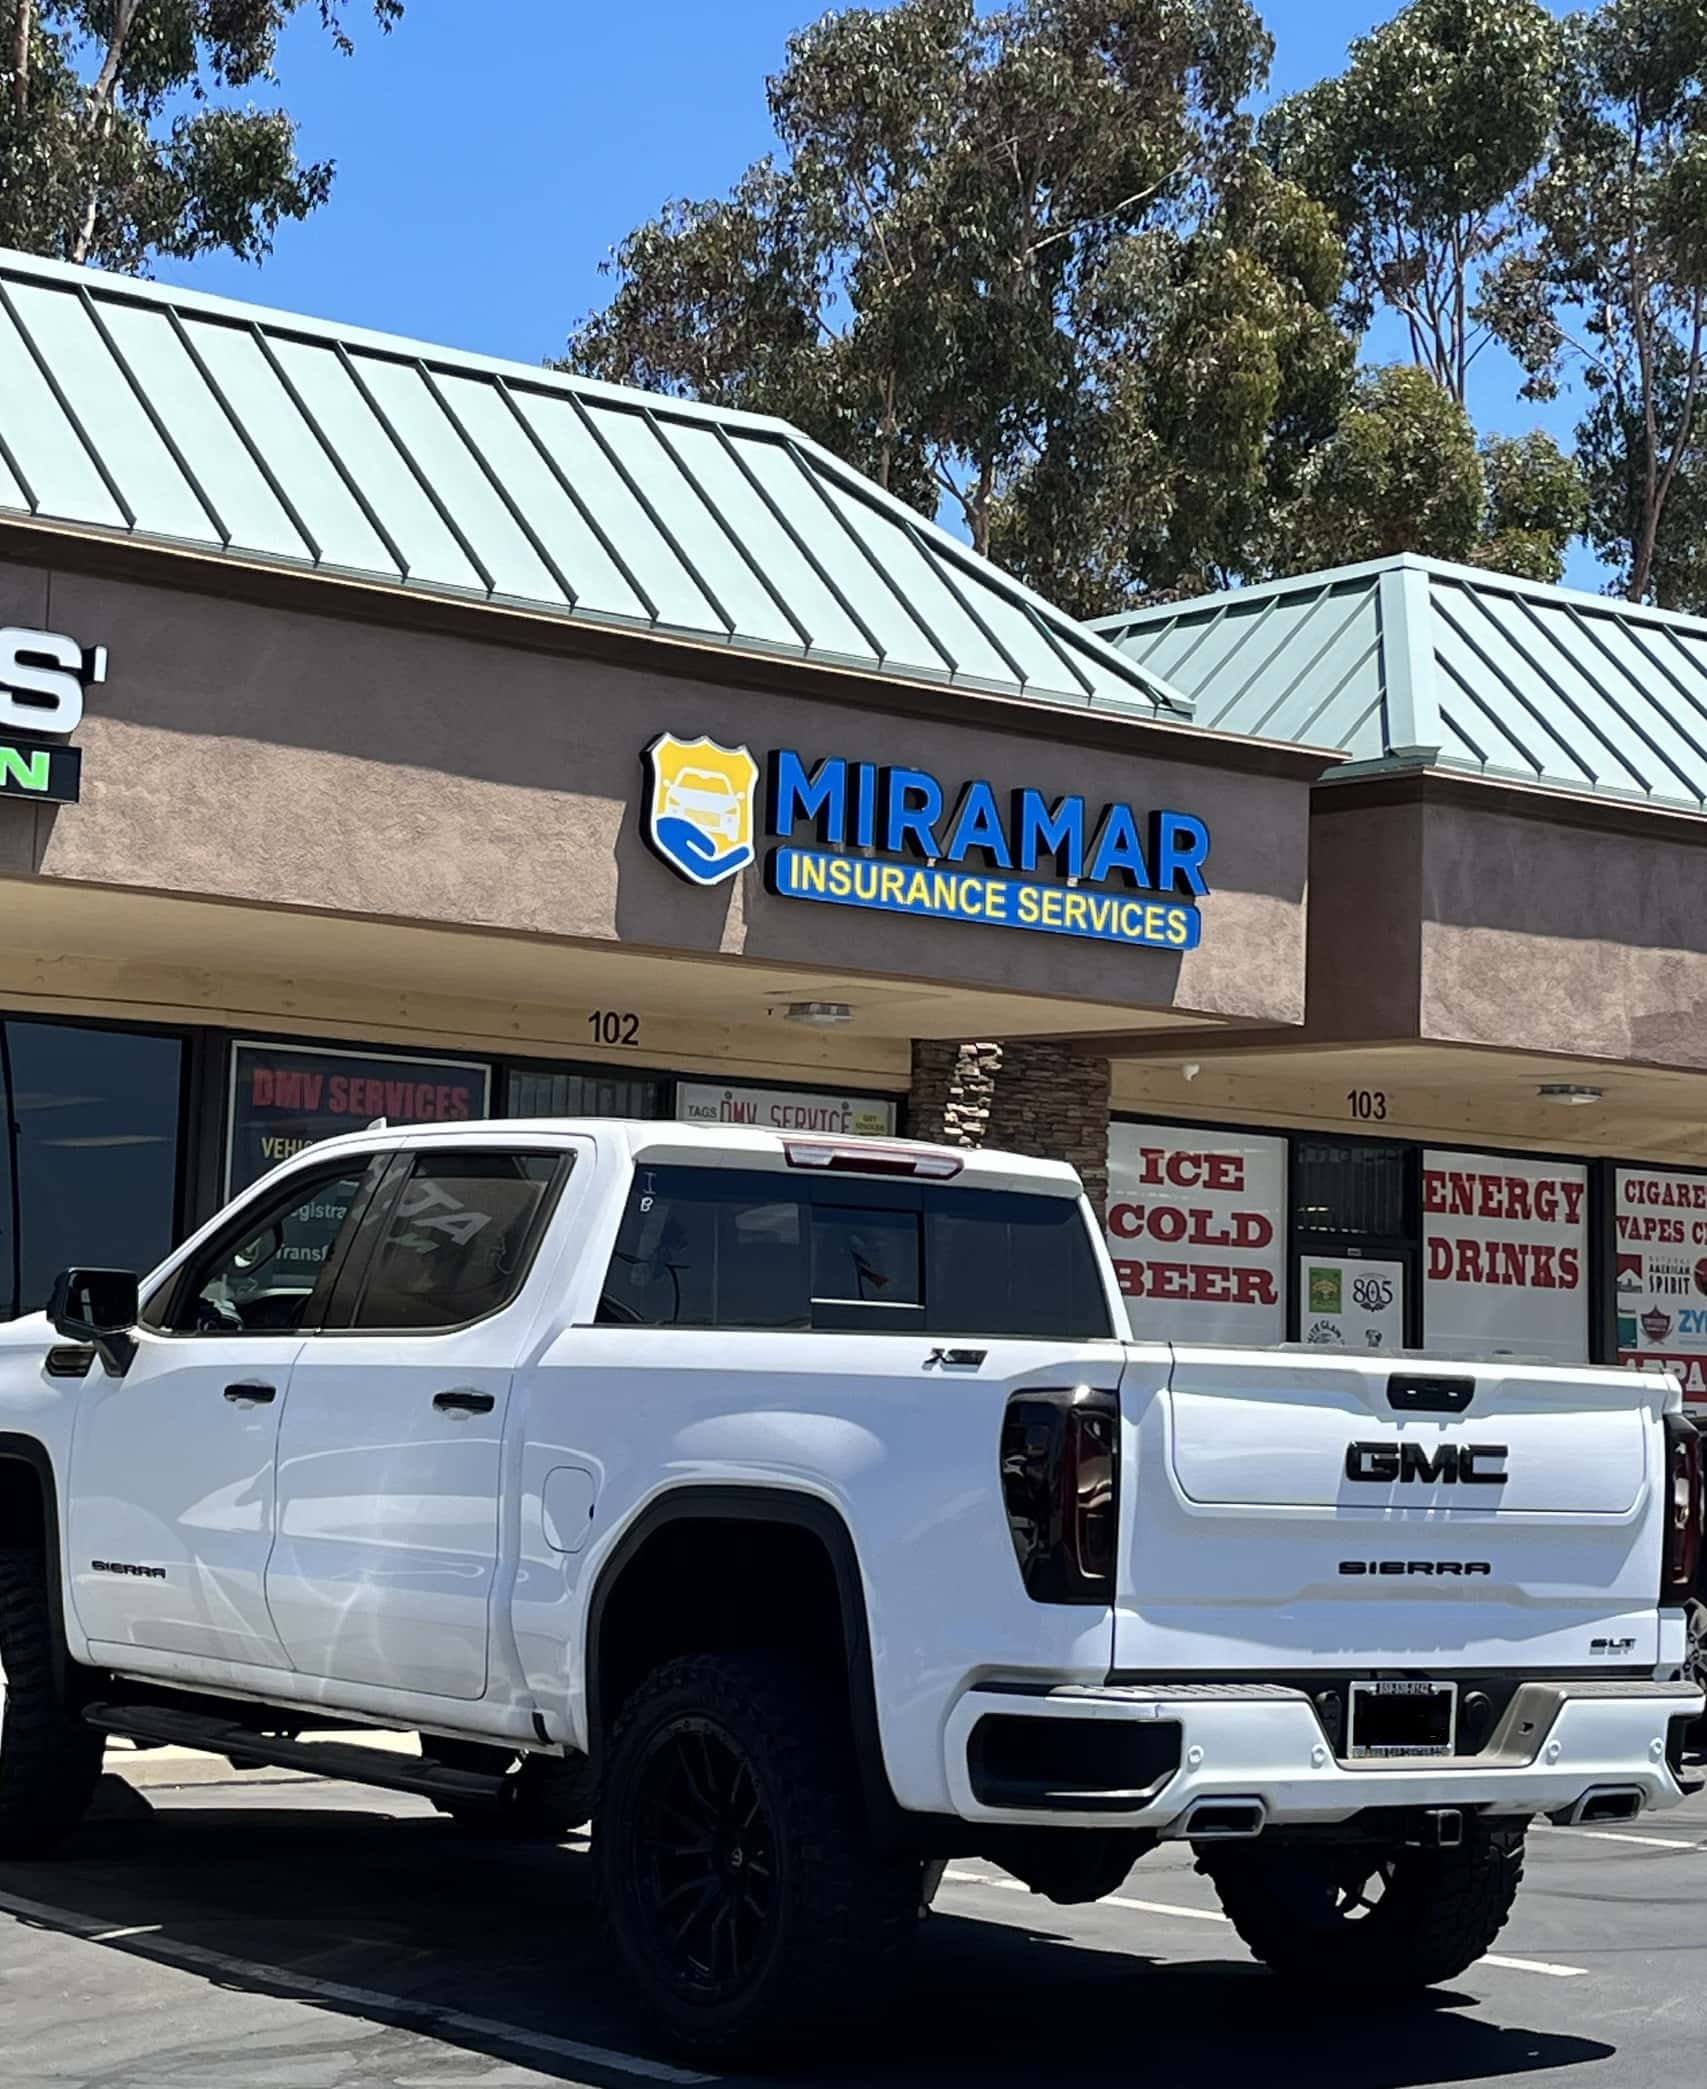 Miramar Insurance DMV Registration Services - San Diego, CA, US, dmv state of california